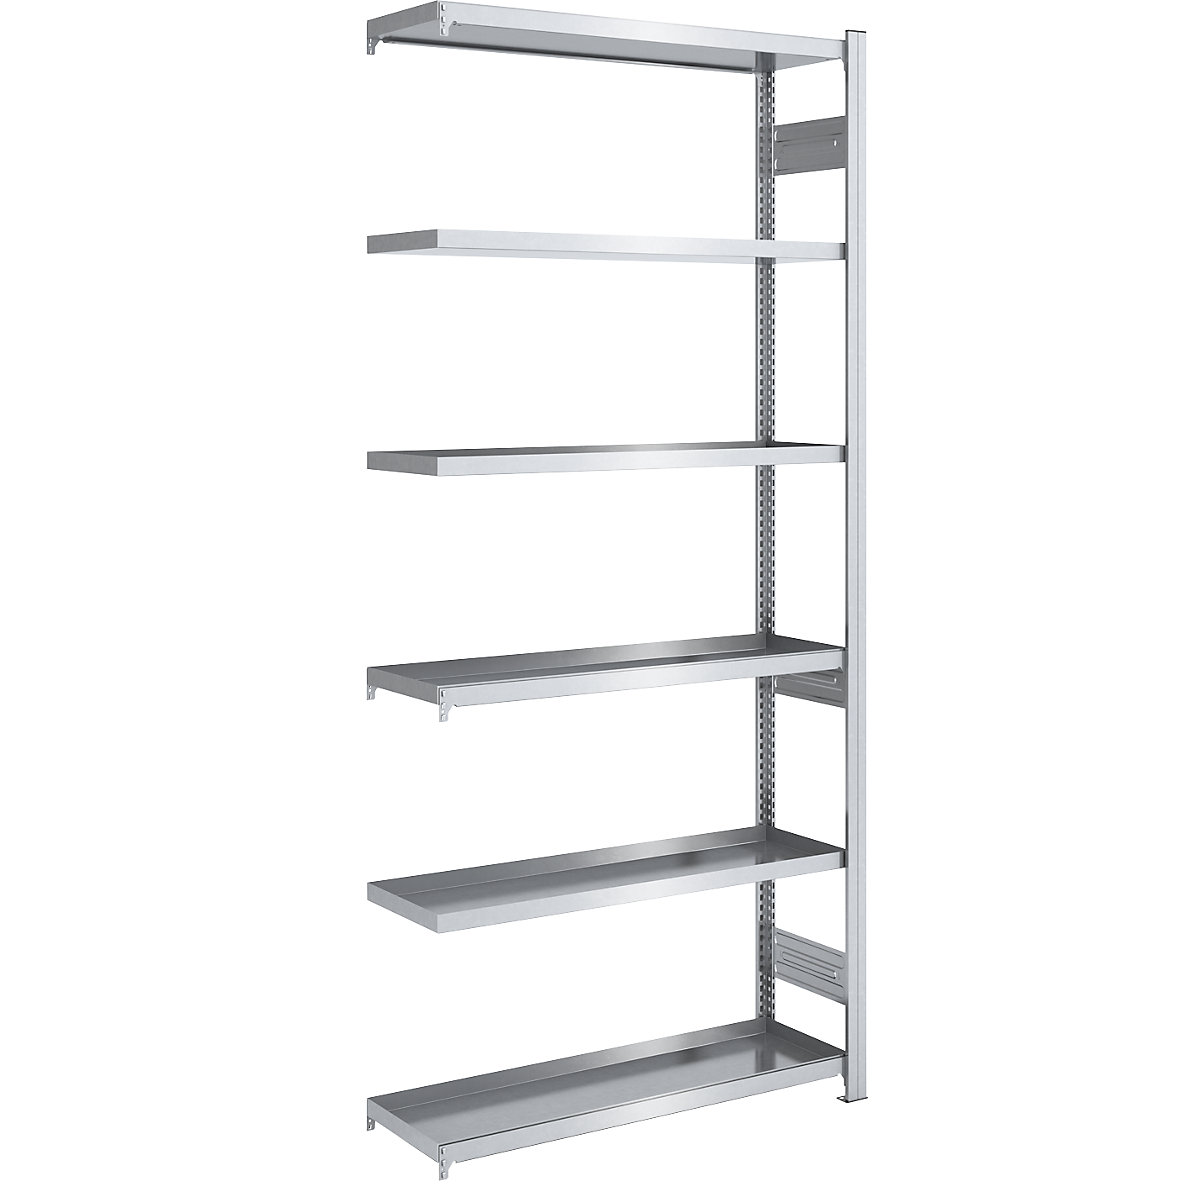 Tray shelf unit – hofe, shelf unit height 2500 mm, tray width 1000 mm, tray depth 400 mm, extension shelf unit